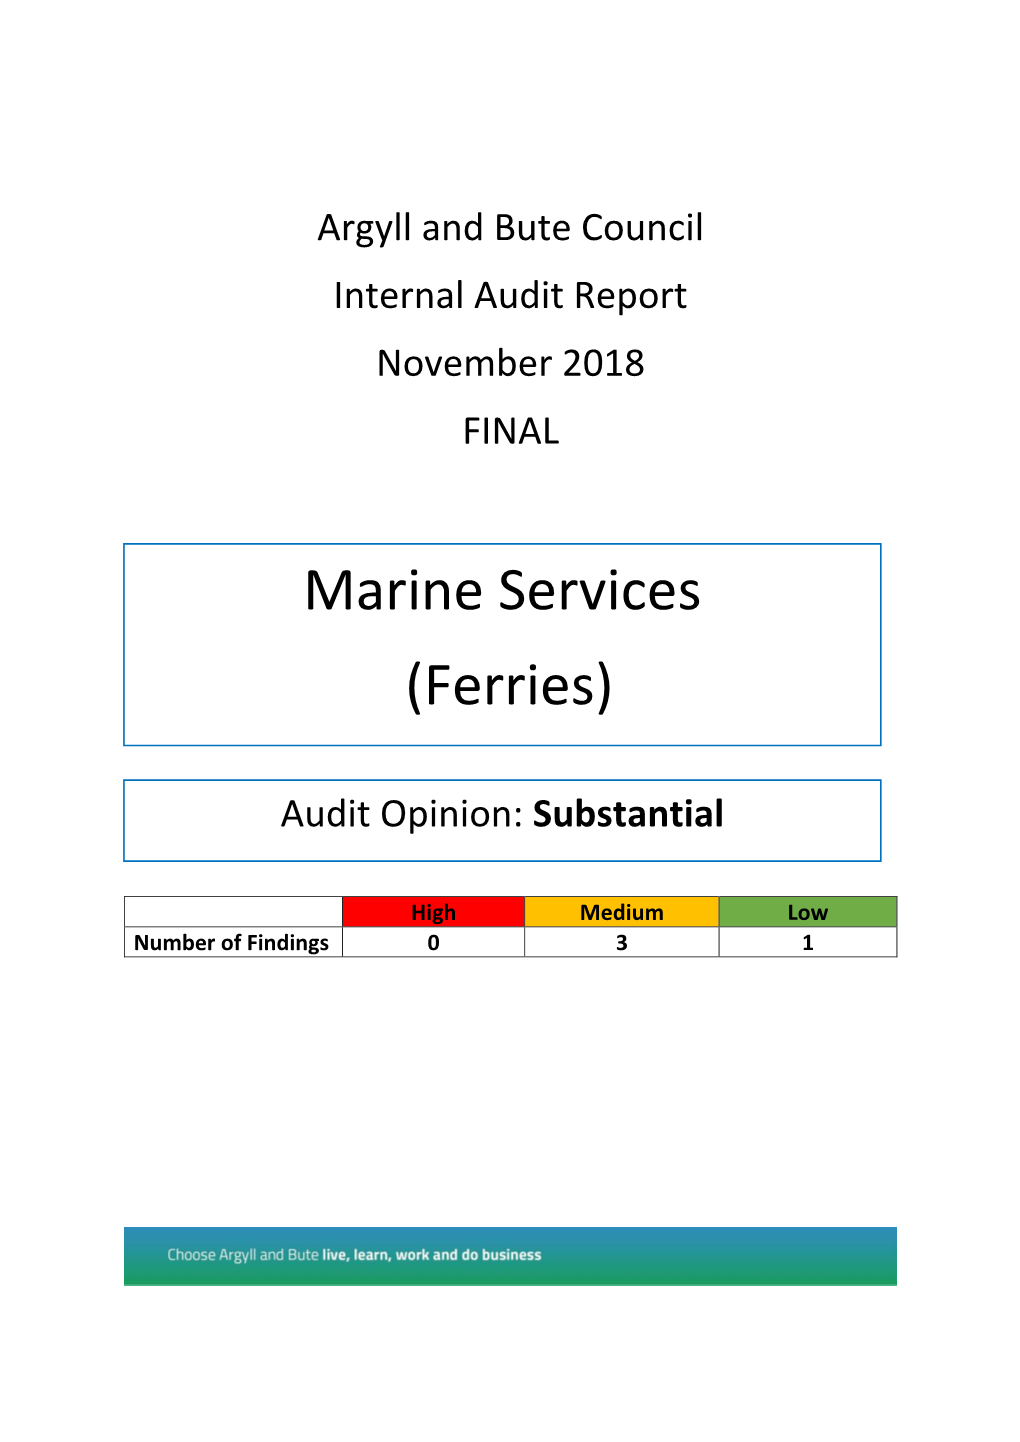 Marine Services (Ferries), November 2018 3